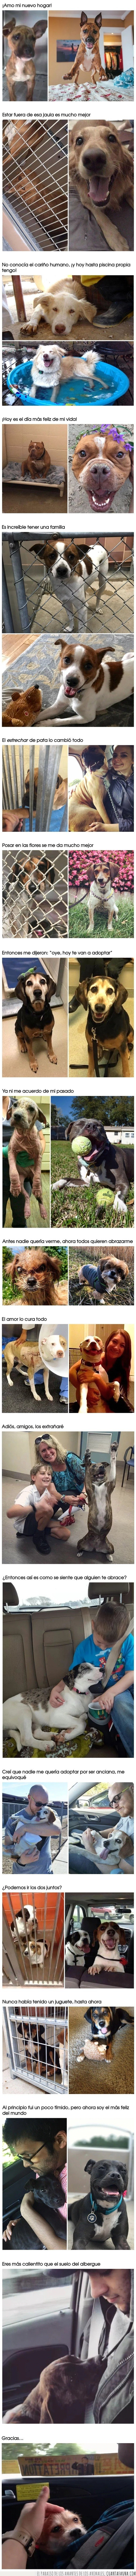 adoptados,perros